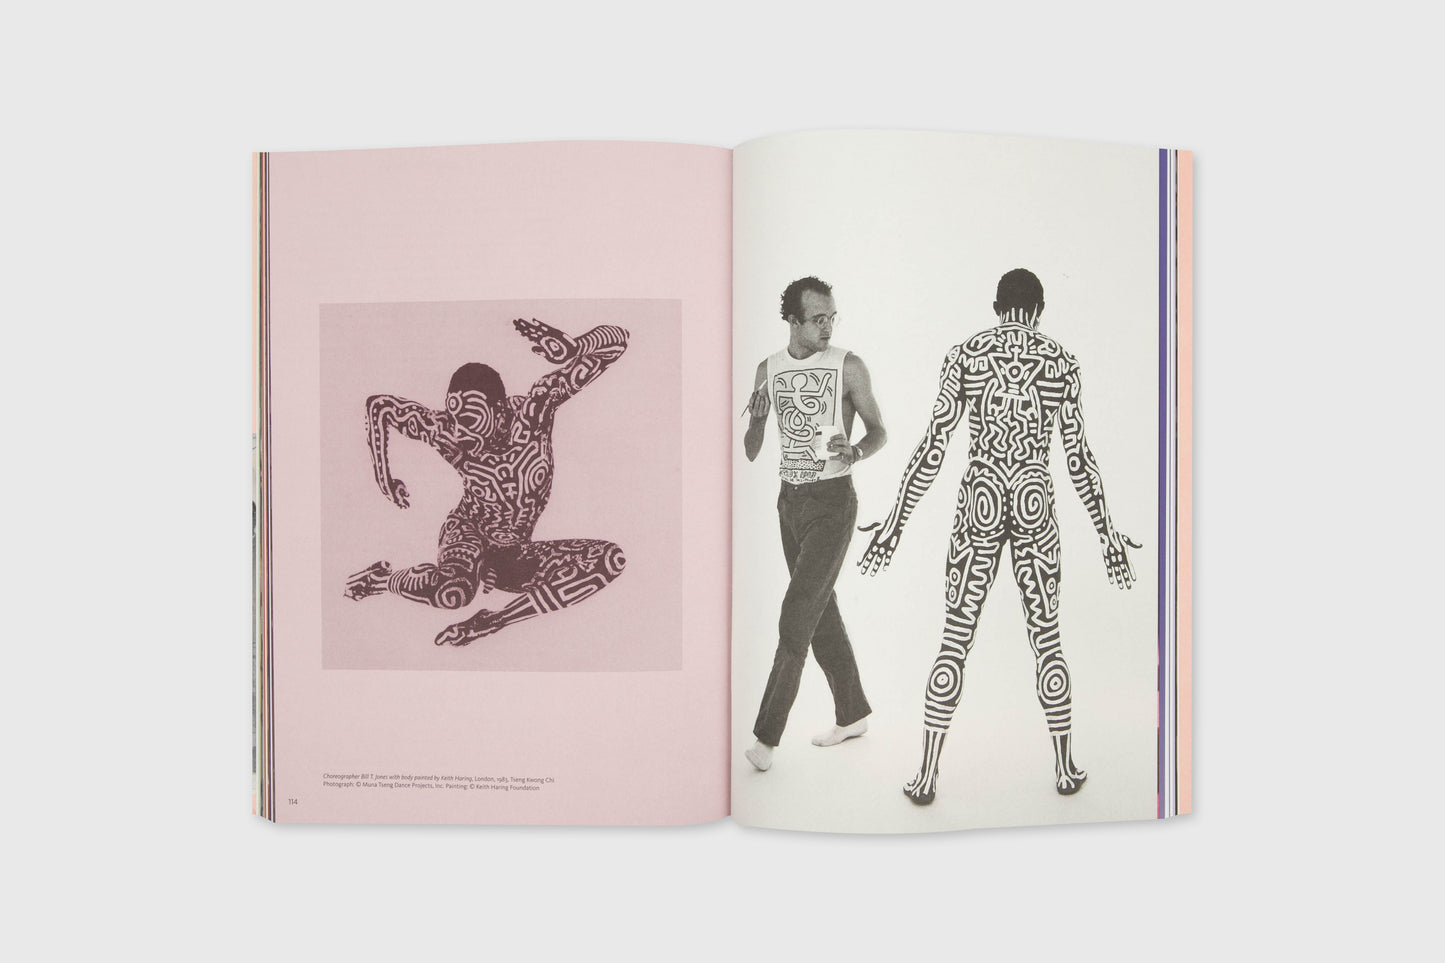 Keith Haring, Muna Tseng & Tseng Kwong Chi: Boundless Minds & Moving Bodies in the 80's New York